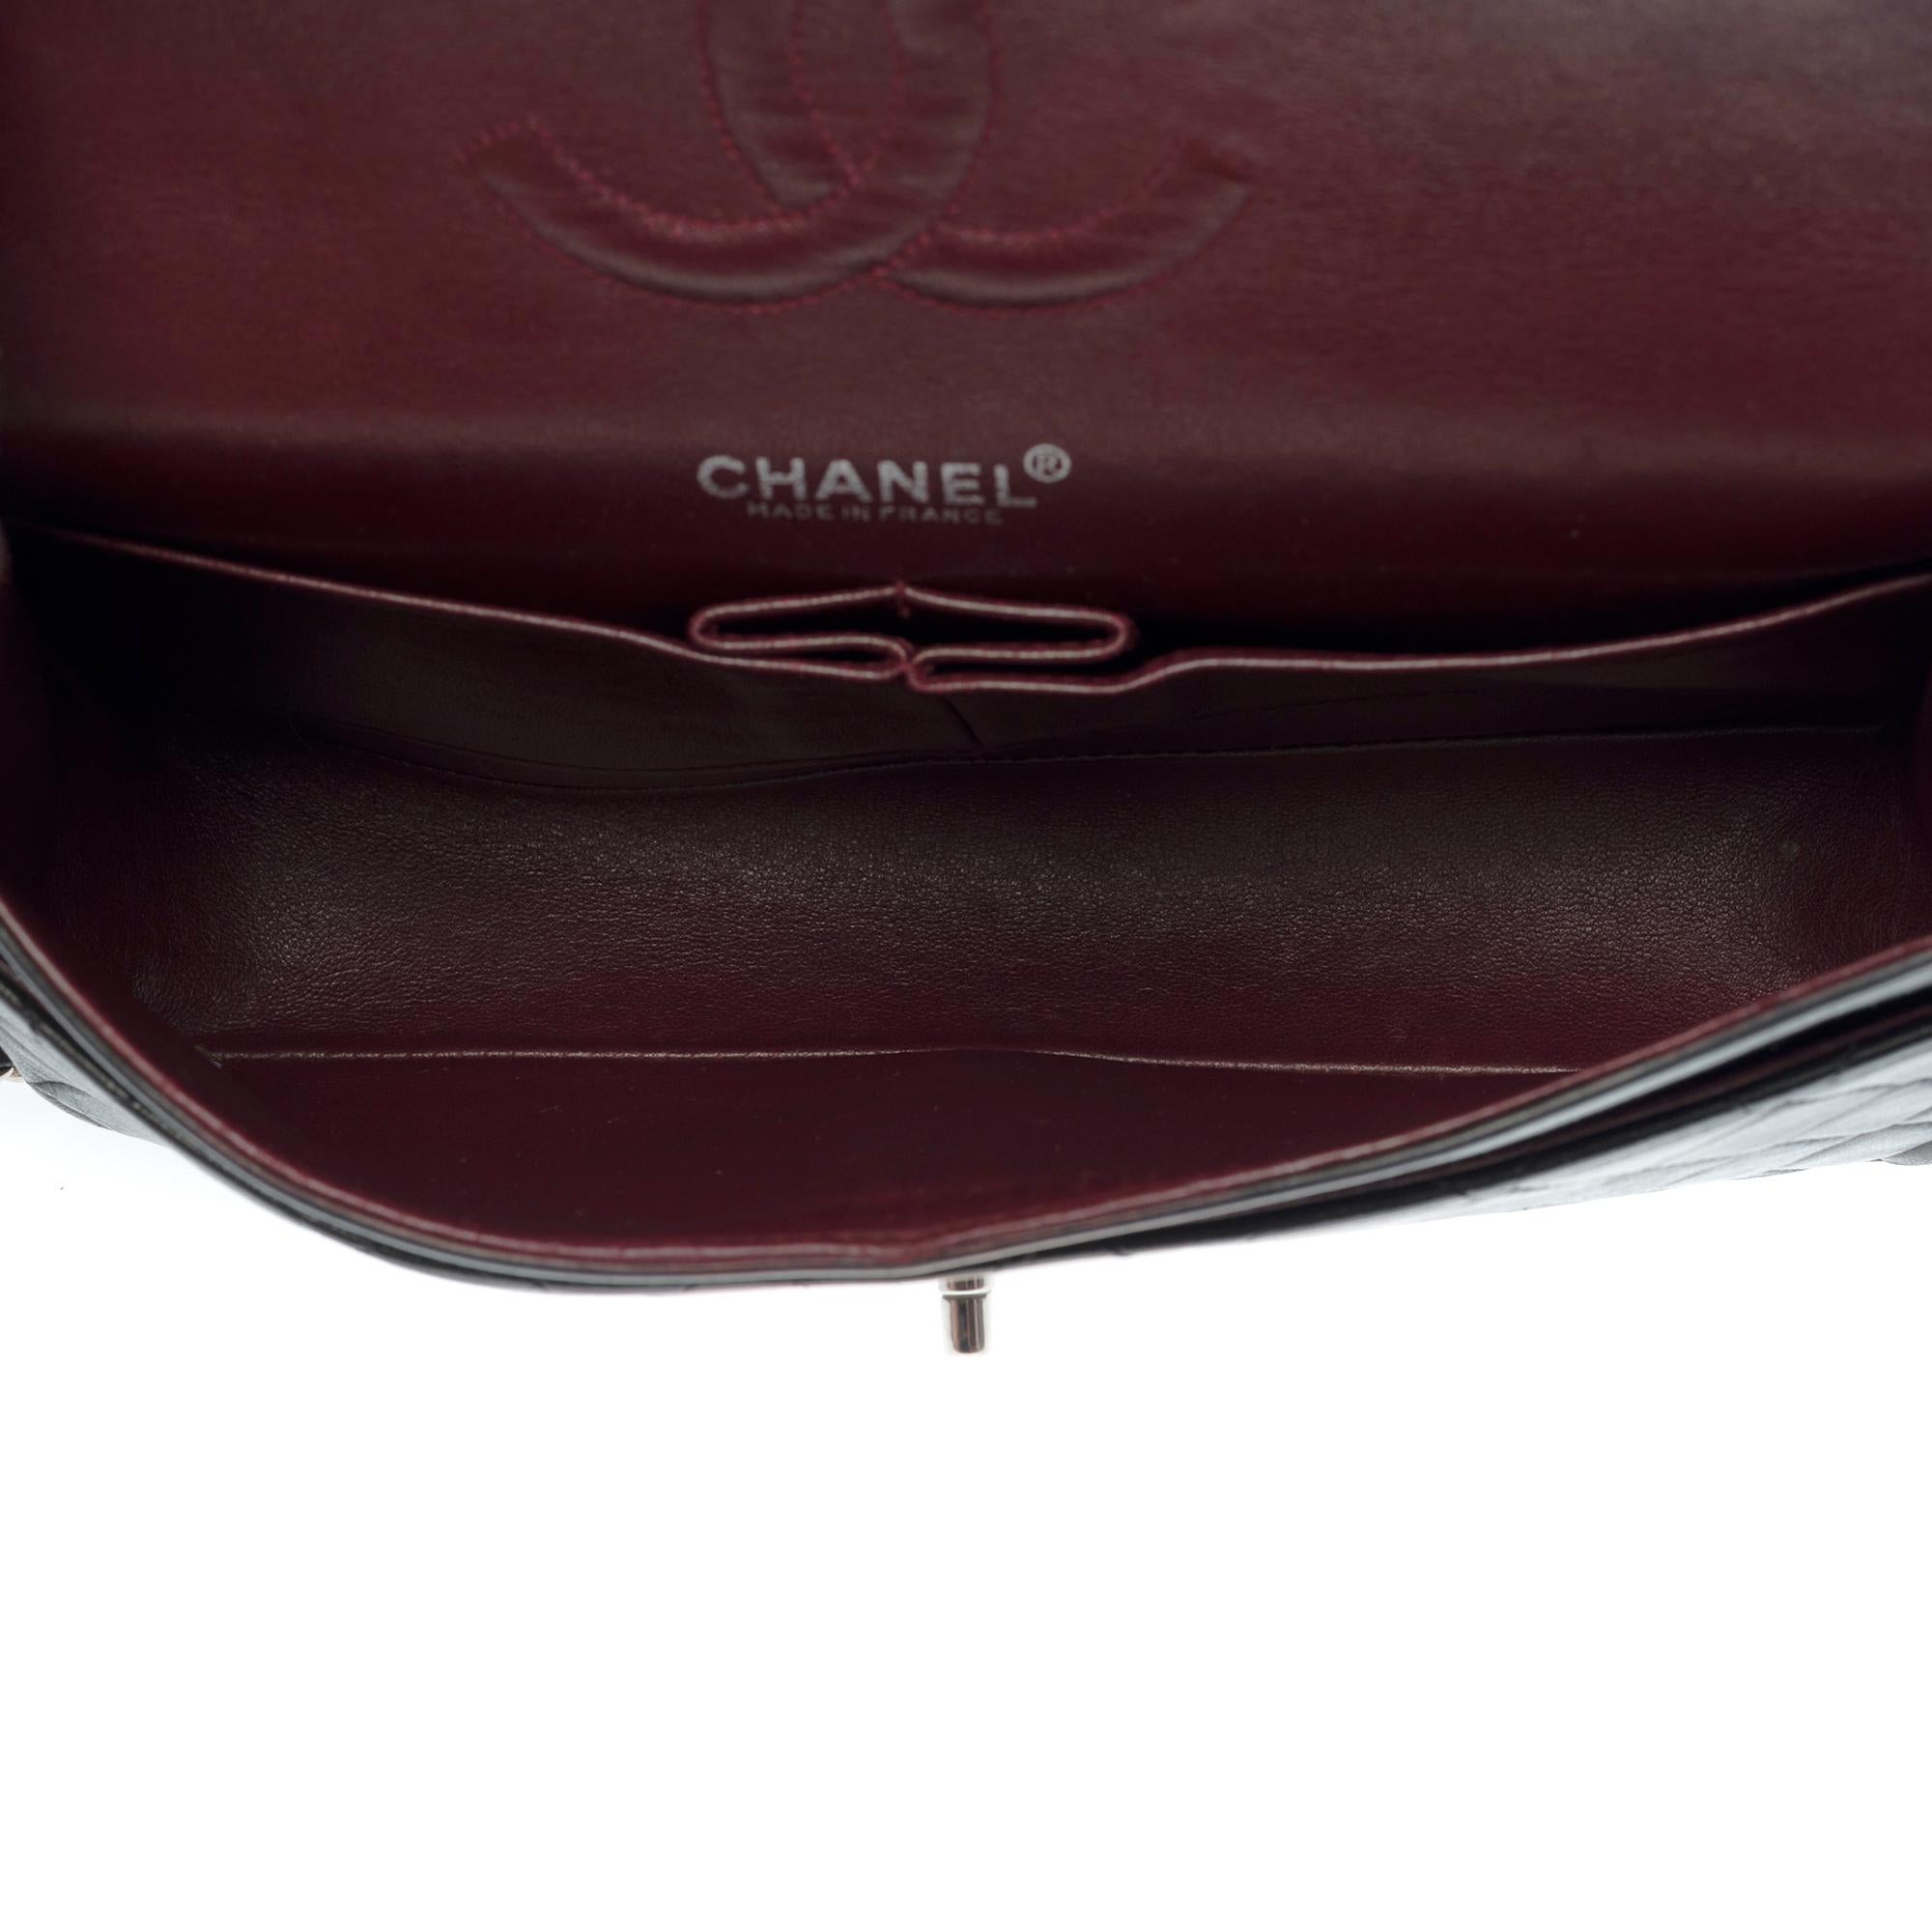 Chanel Timeless Medium 25cm double flap shoulder bag in black lambskin, SHW 2